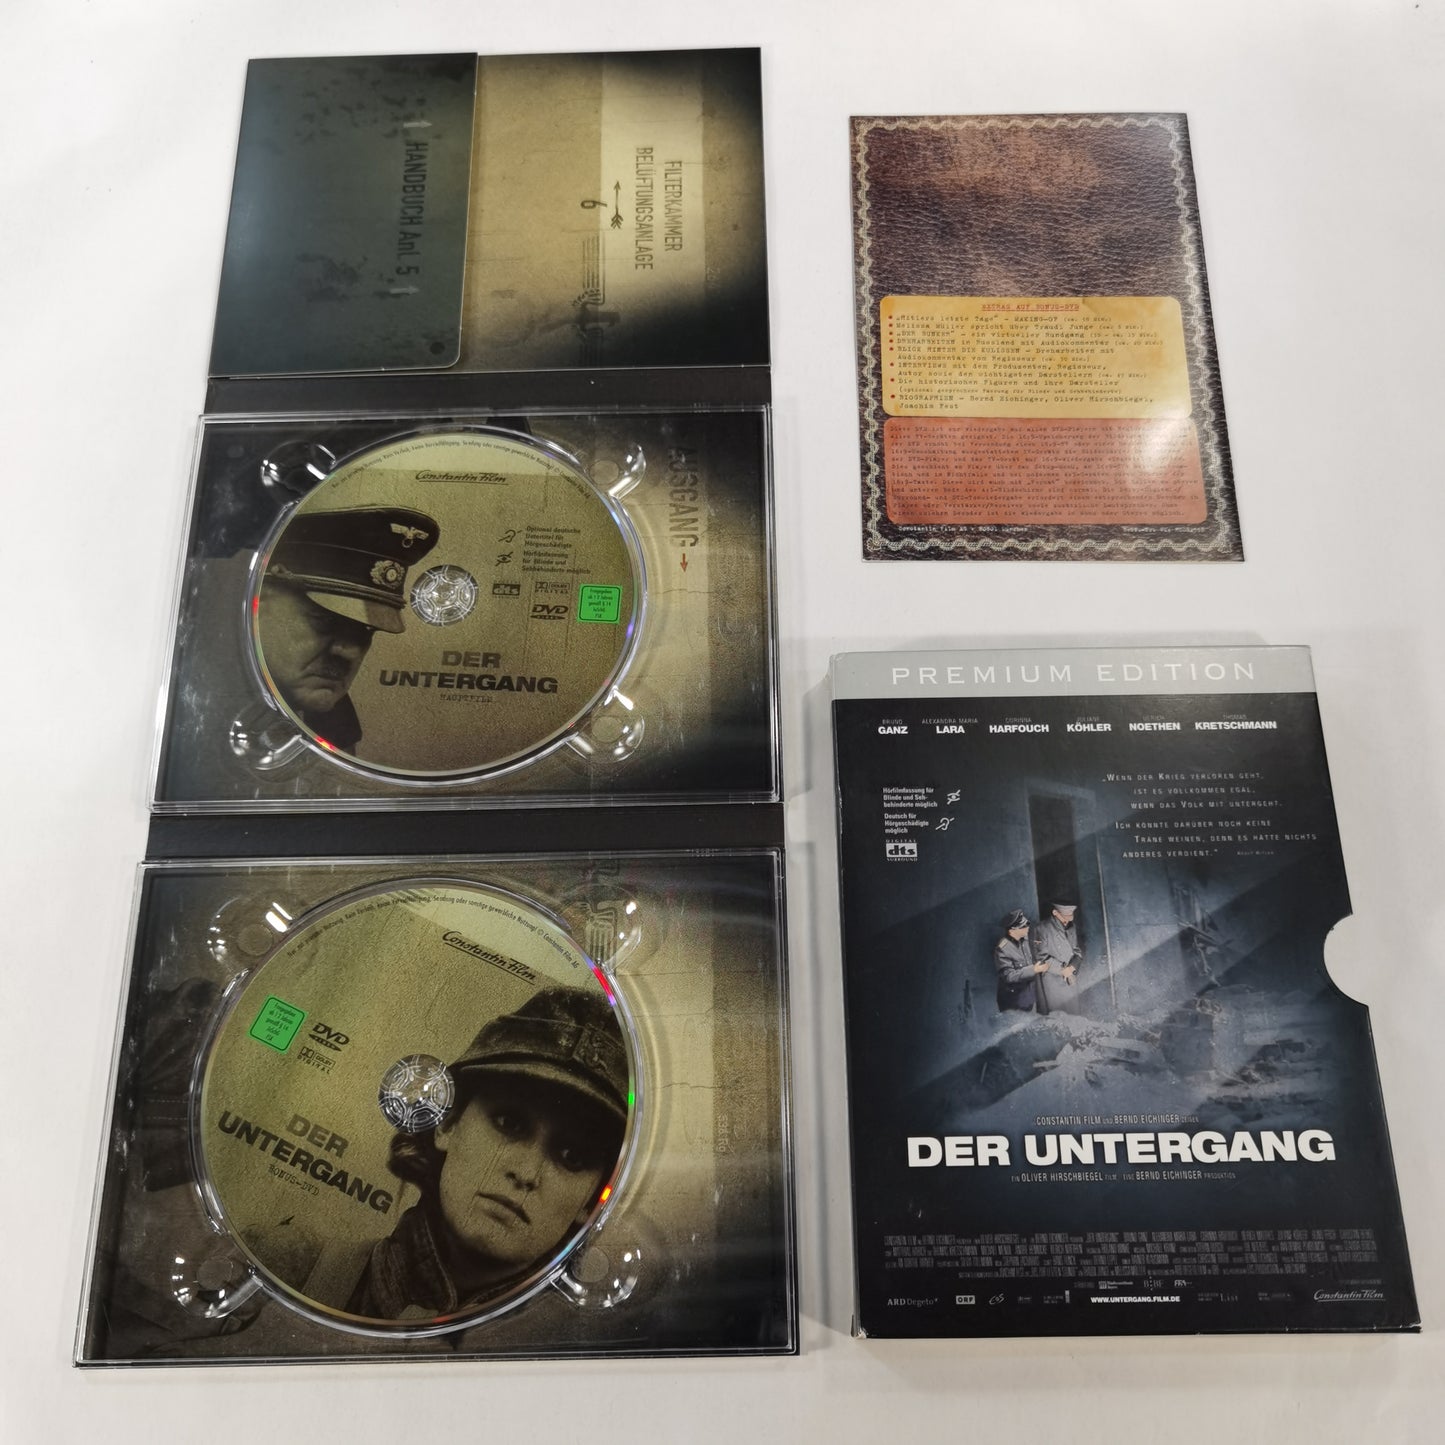 Der Untergang (2004) - DVD DE Premium Edition